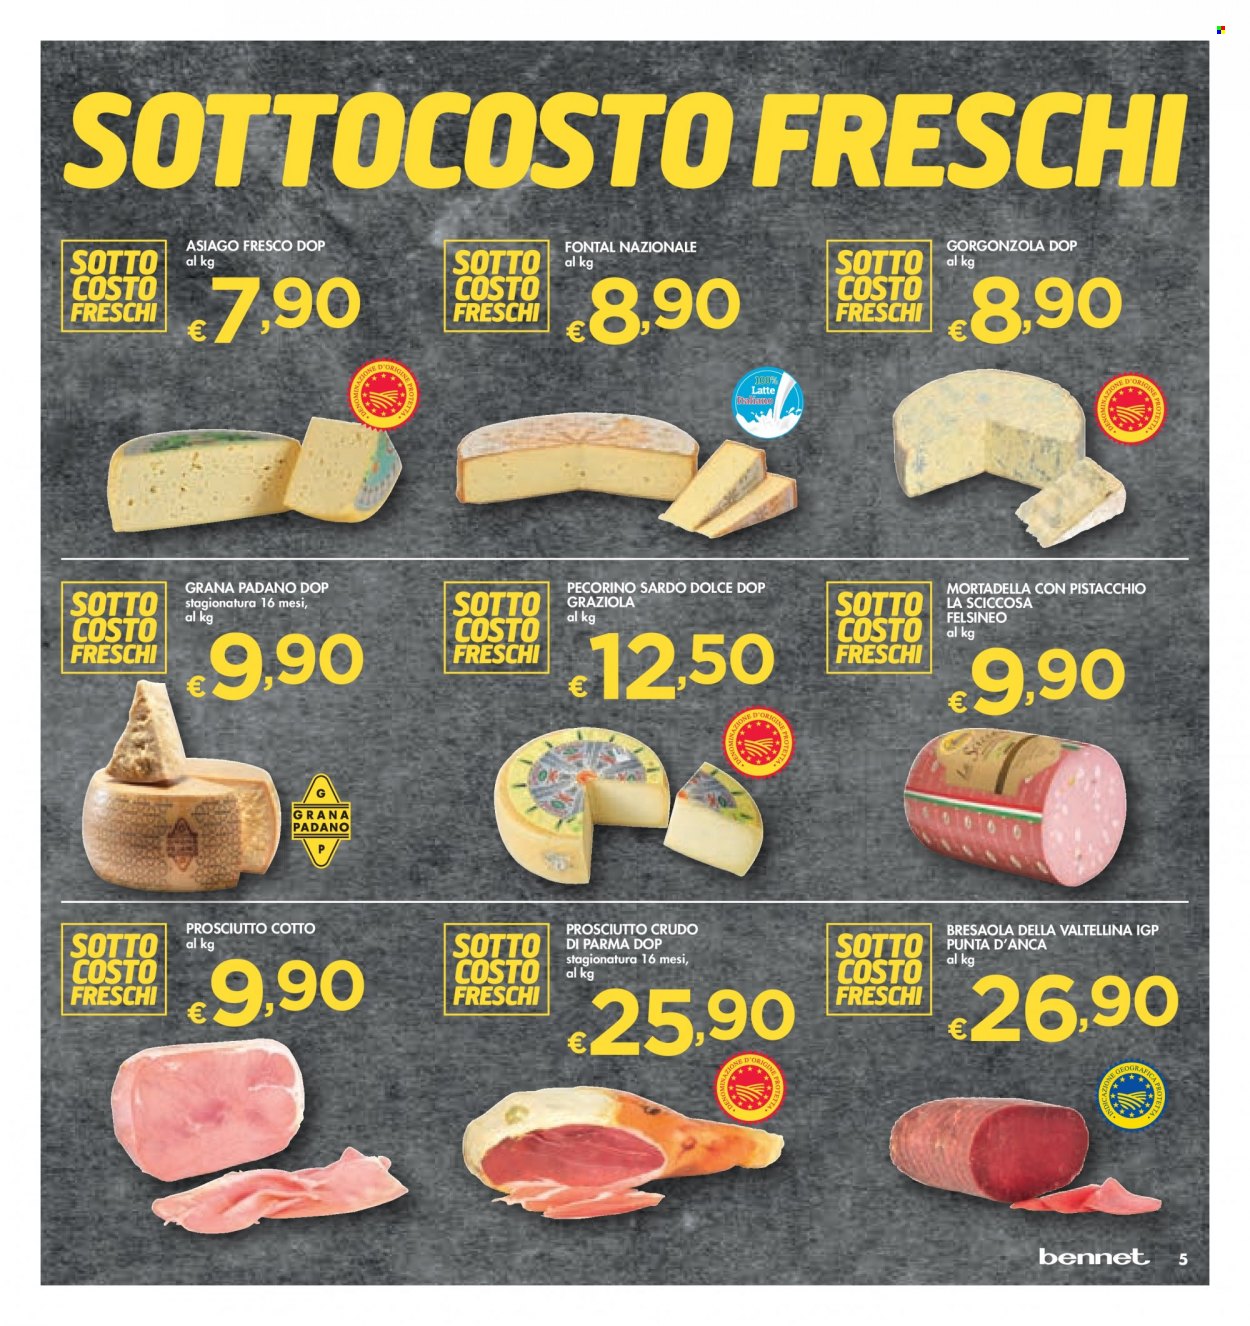 thumbnail - Volantino bennet - 26/5/2022 - 8/6/2022 - Prodotti in offerta - bresaola, mortadella, formaggio, pecorino, gorgonzola, Grana Padano, Asiago, Pecorino Sardo, latte. Pagina 5.